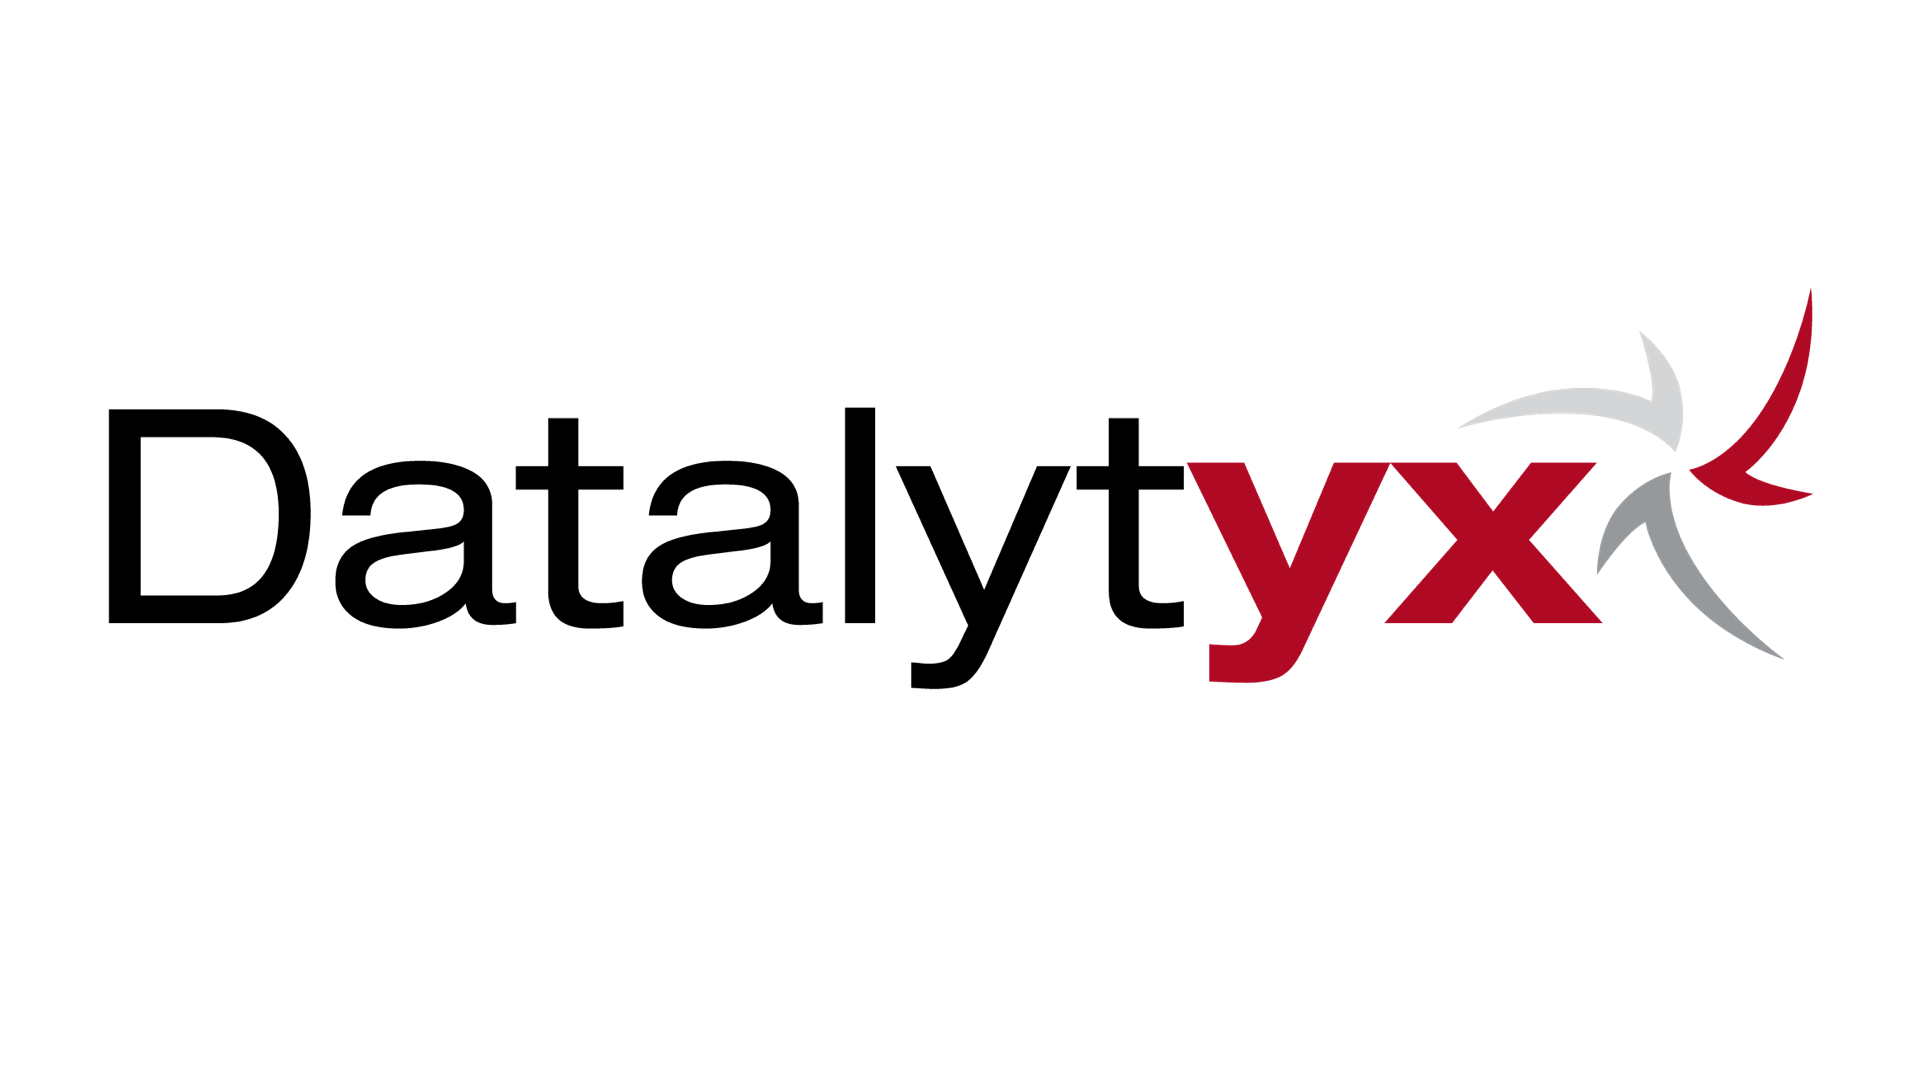 Datalytyx